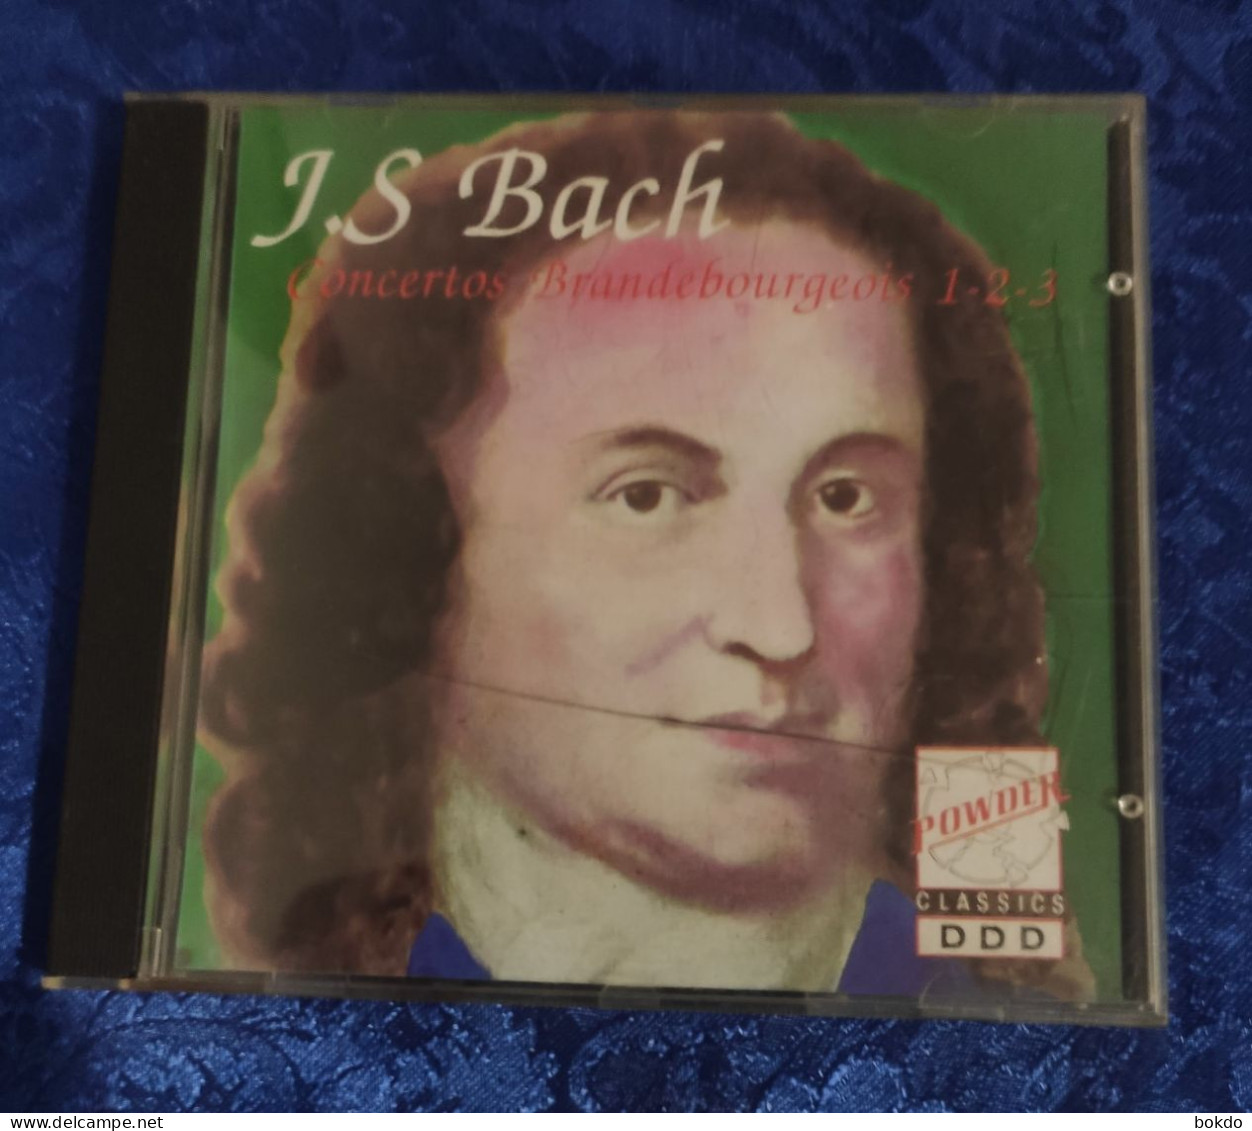 J.S. BACH - Concertos - Klassiekers